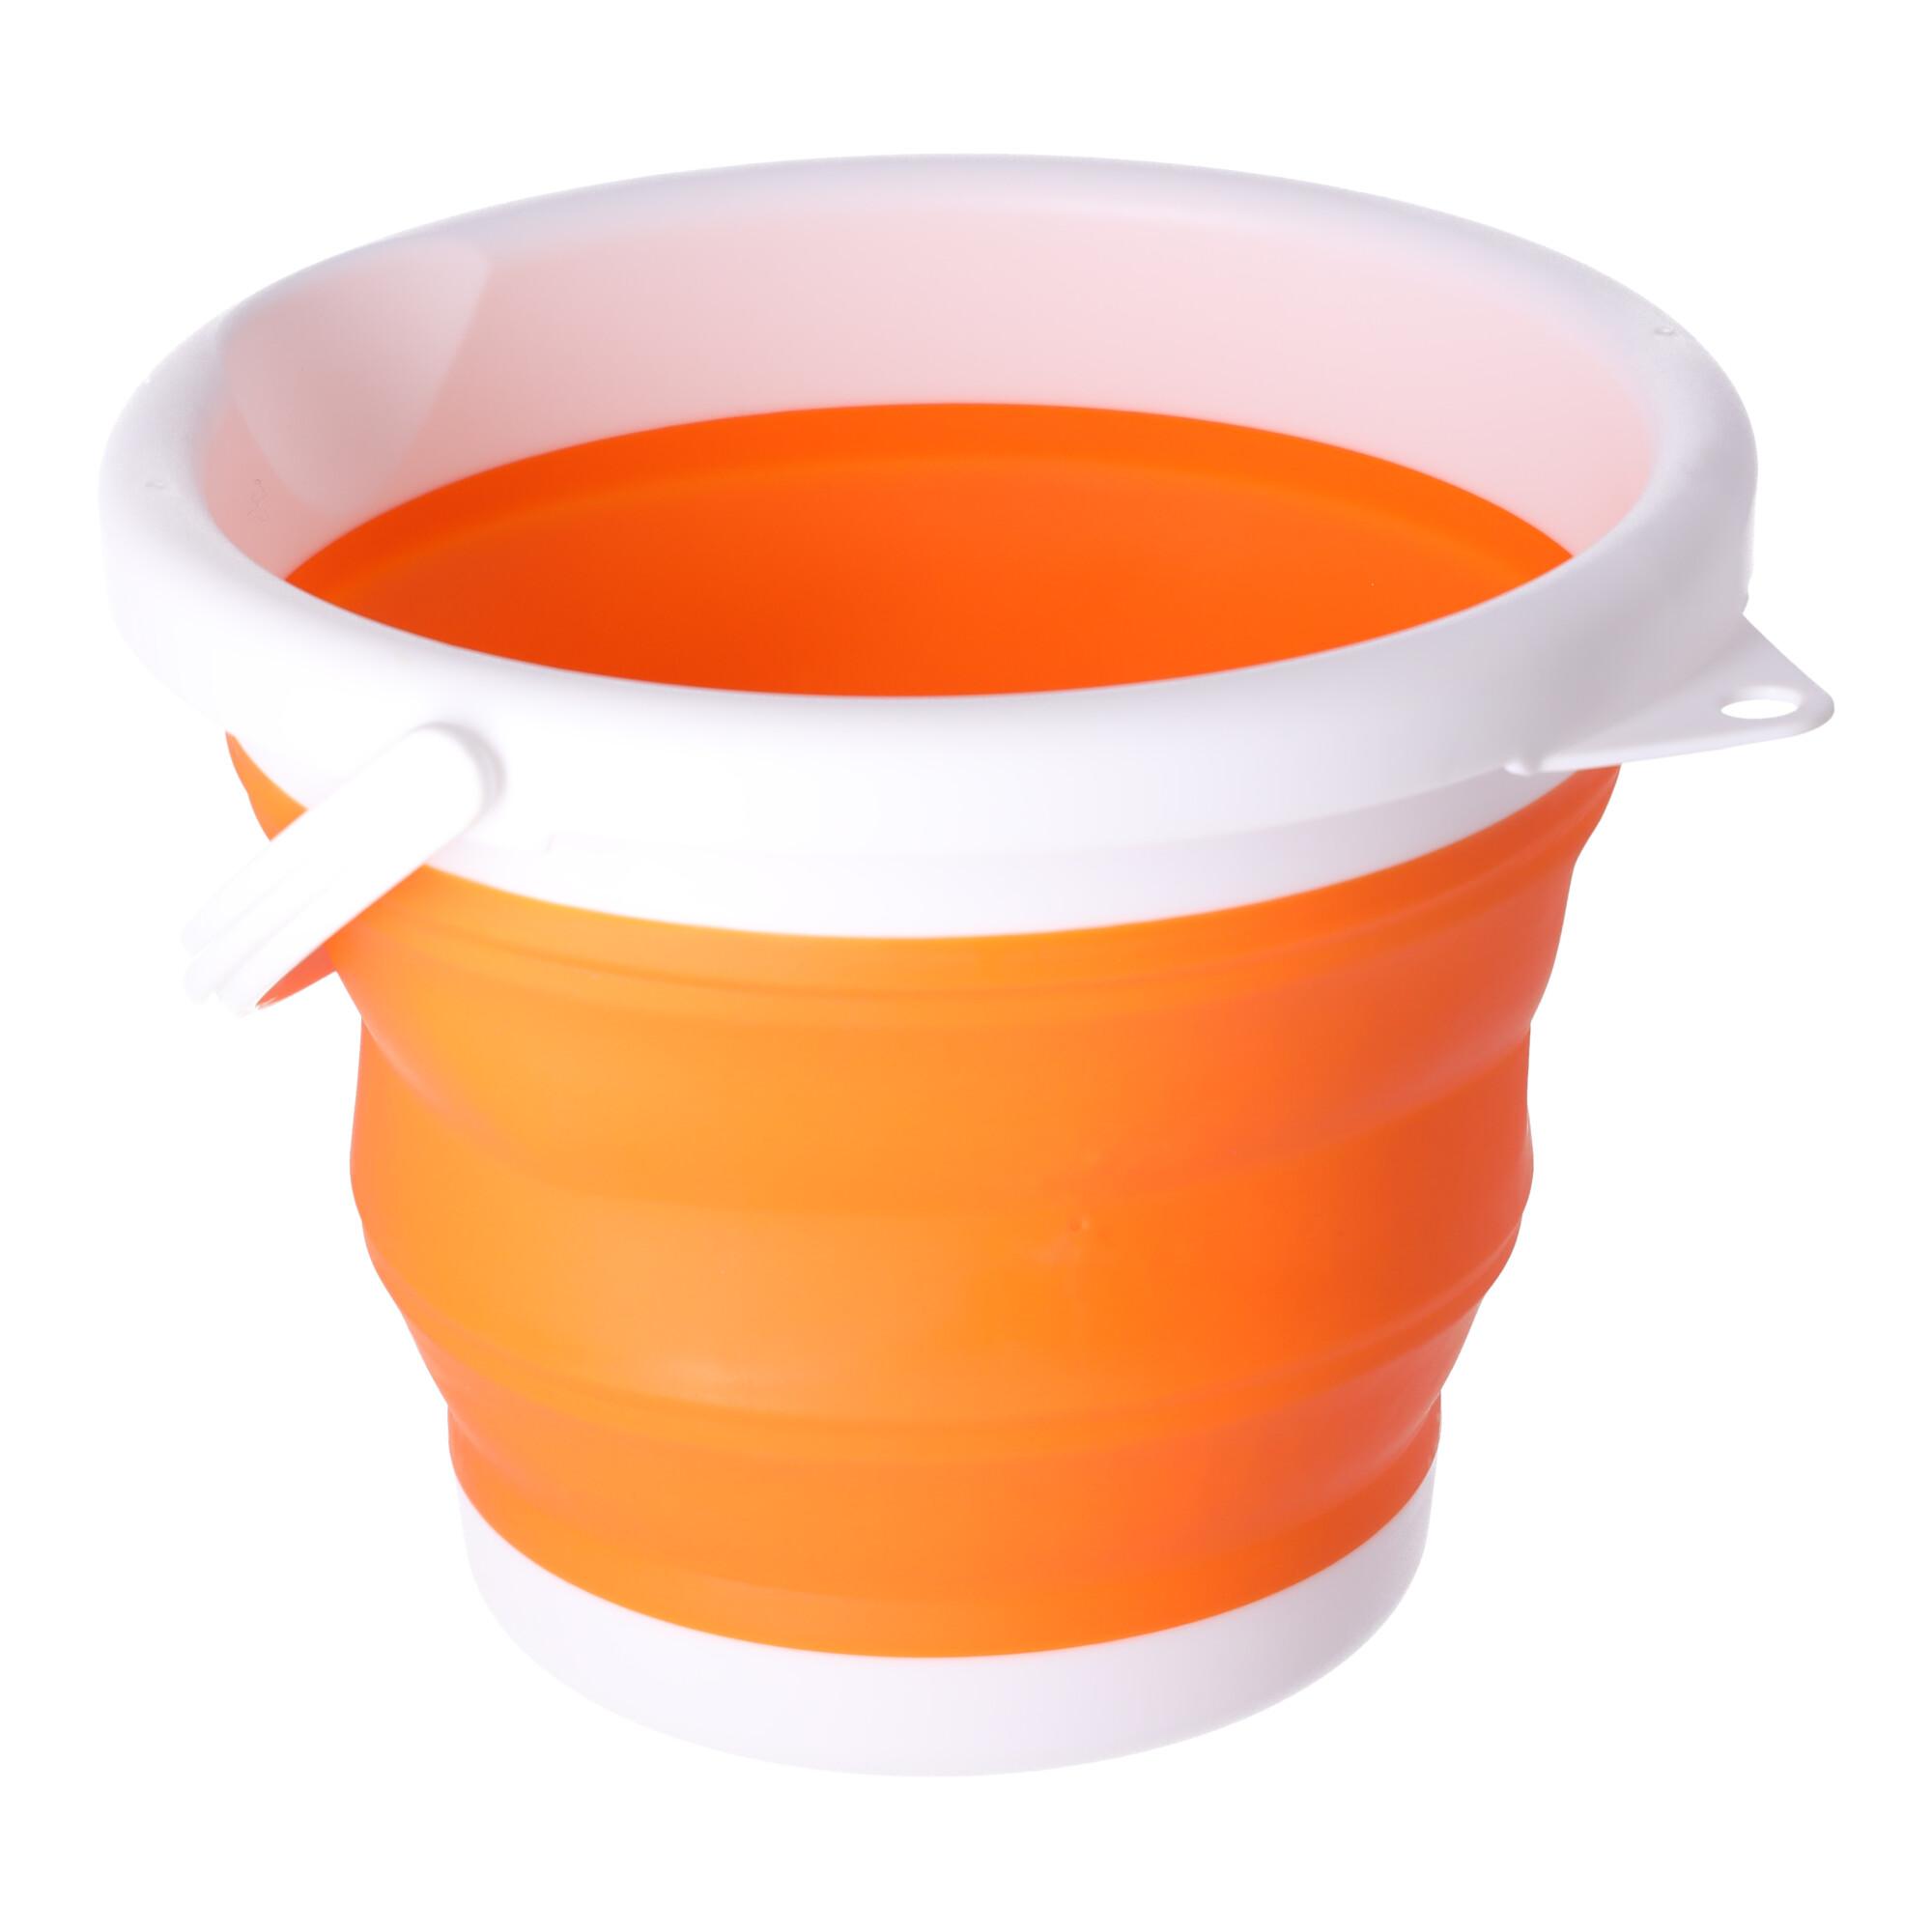 Silicone bucket 5L foldable - orange and white